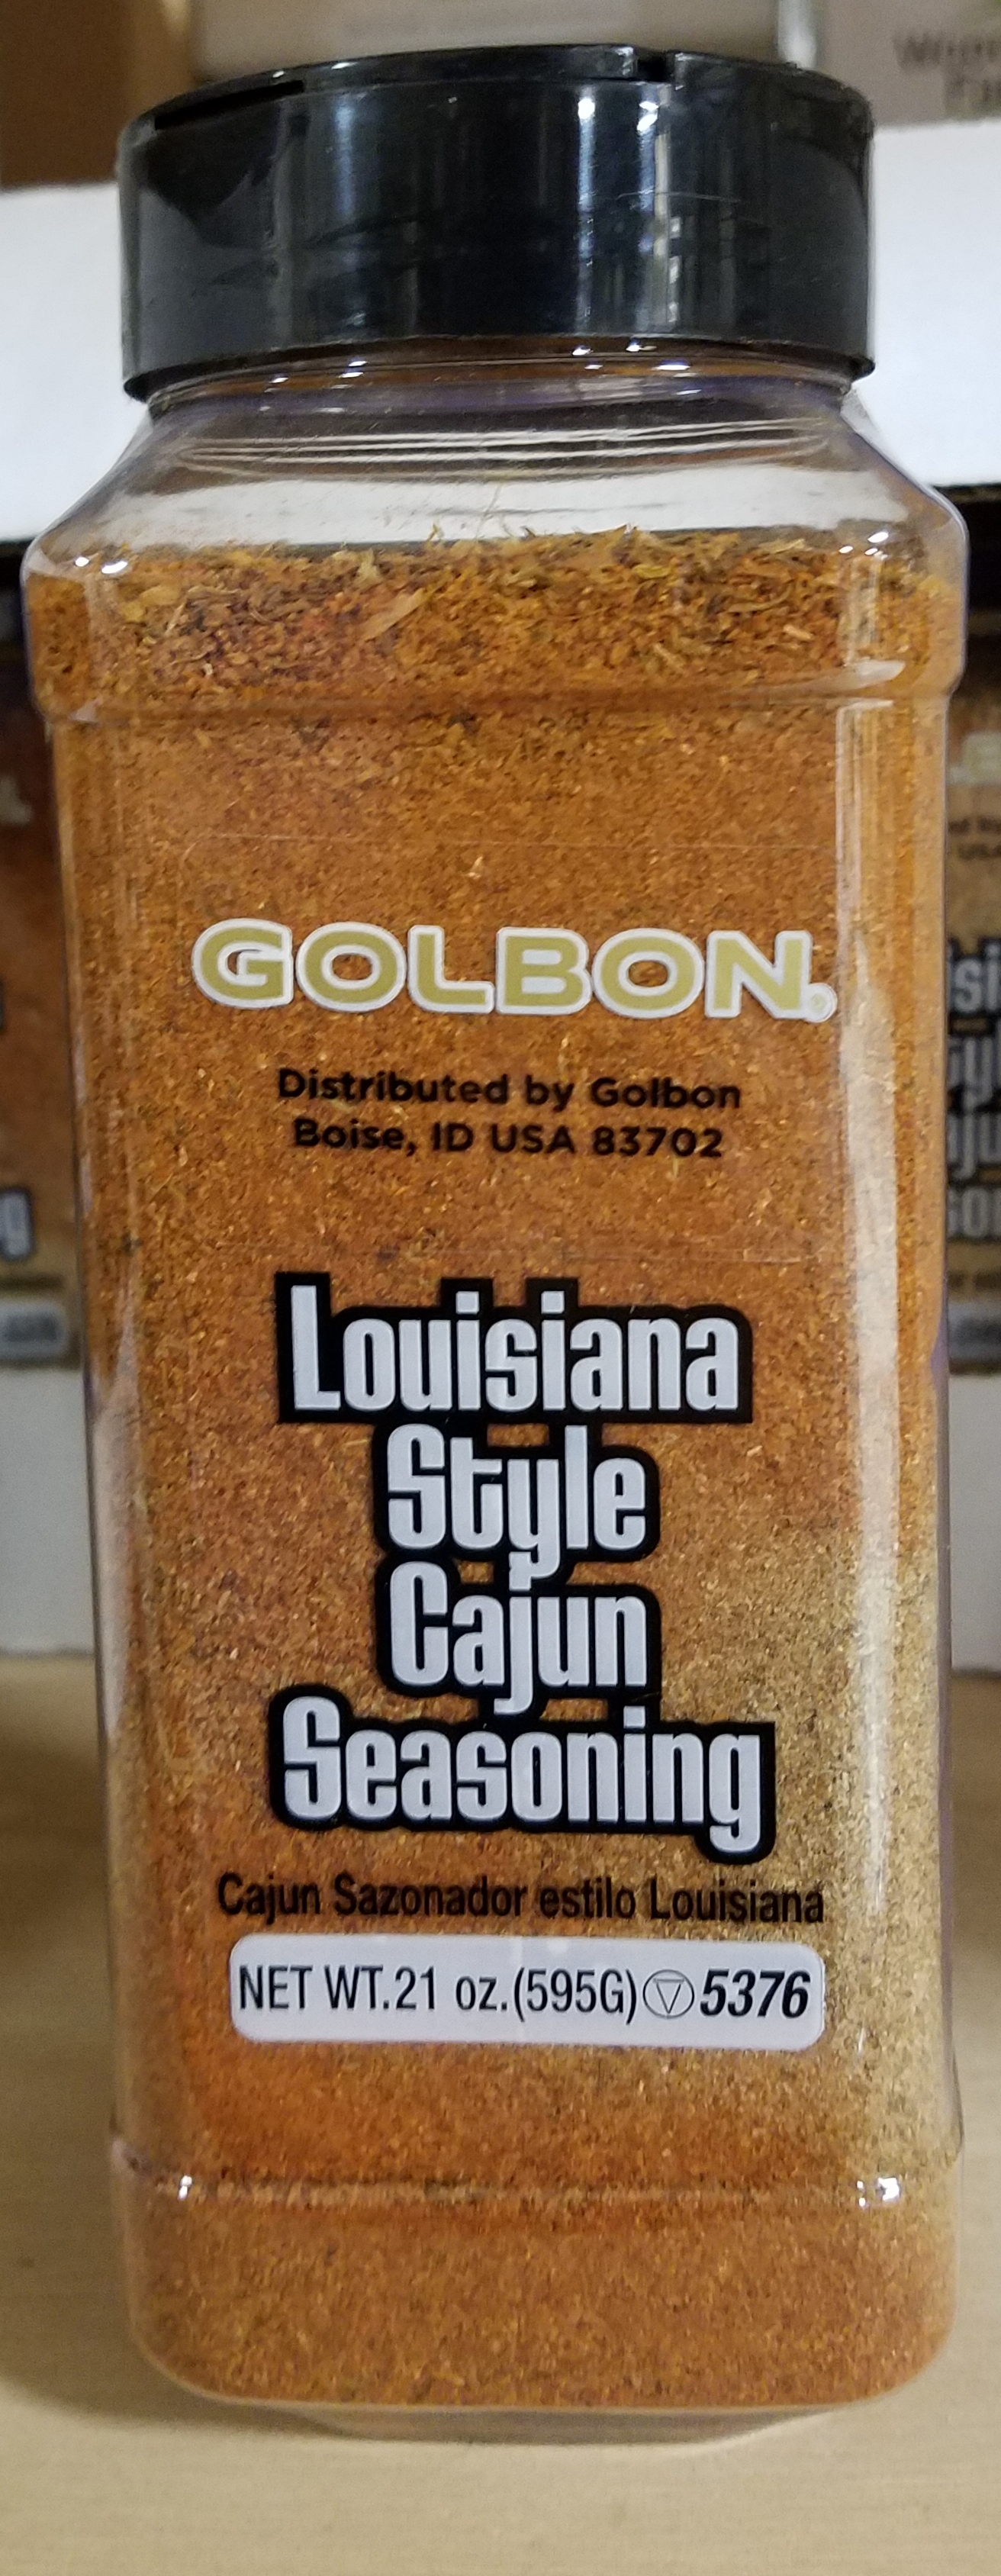 Cajun Seasoning Louisiana 6/PC1 (21oz) - Sold by EA